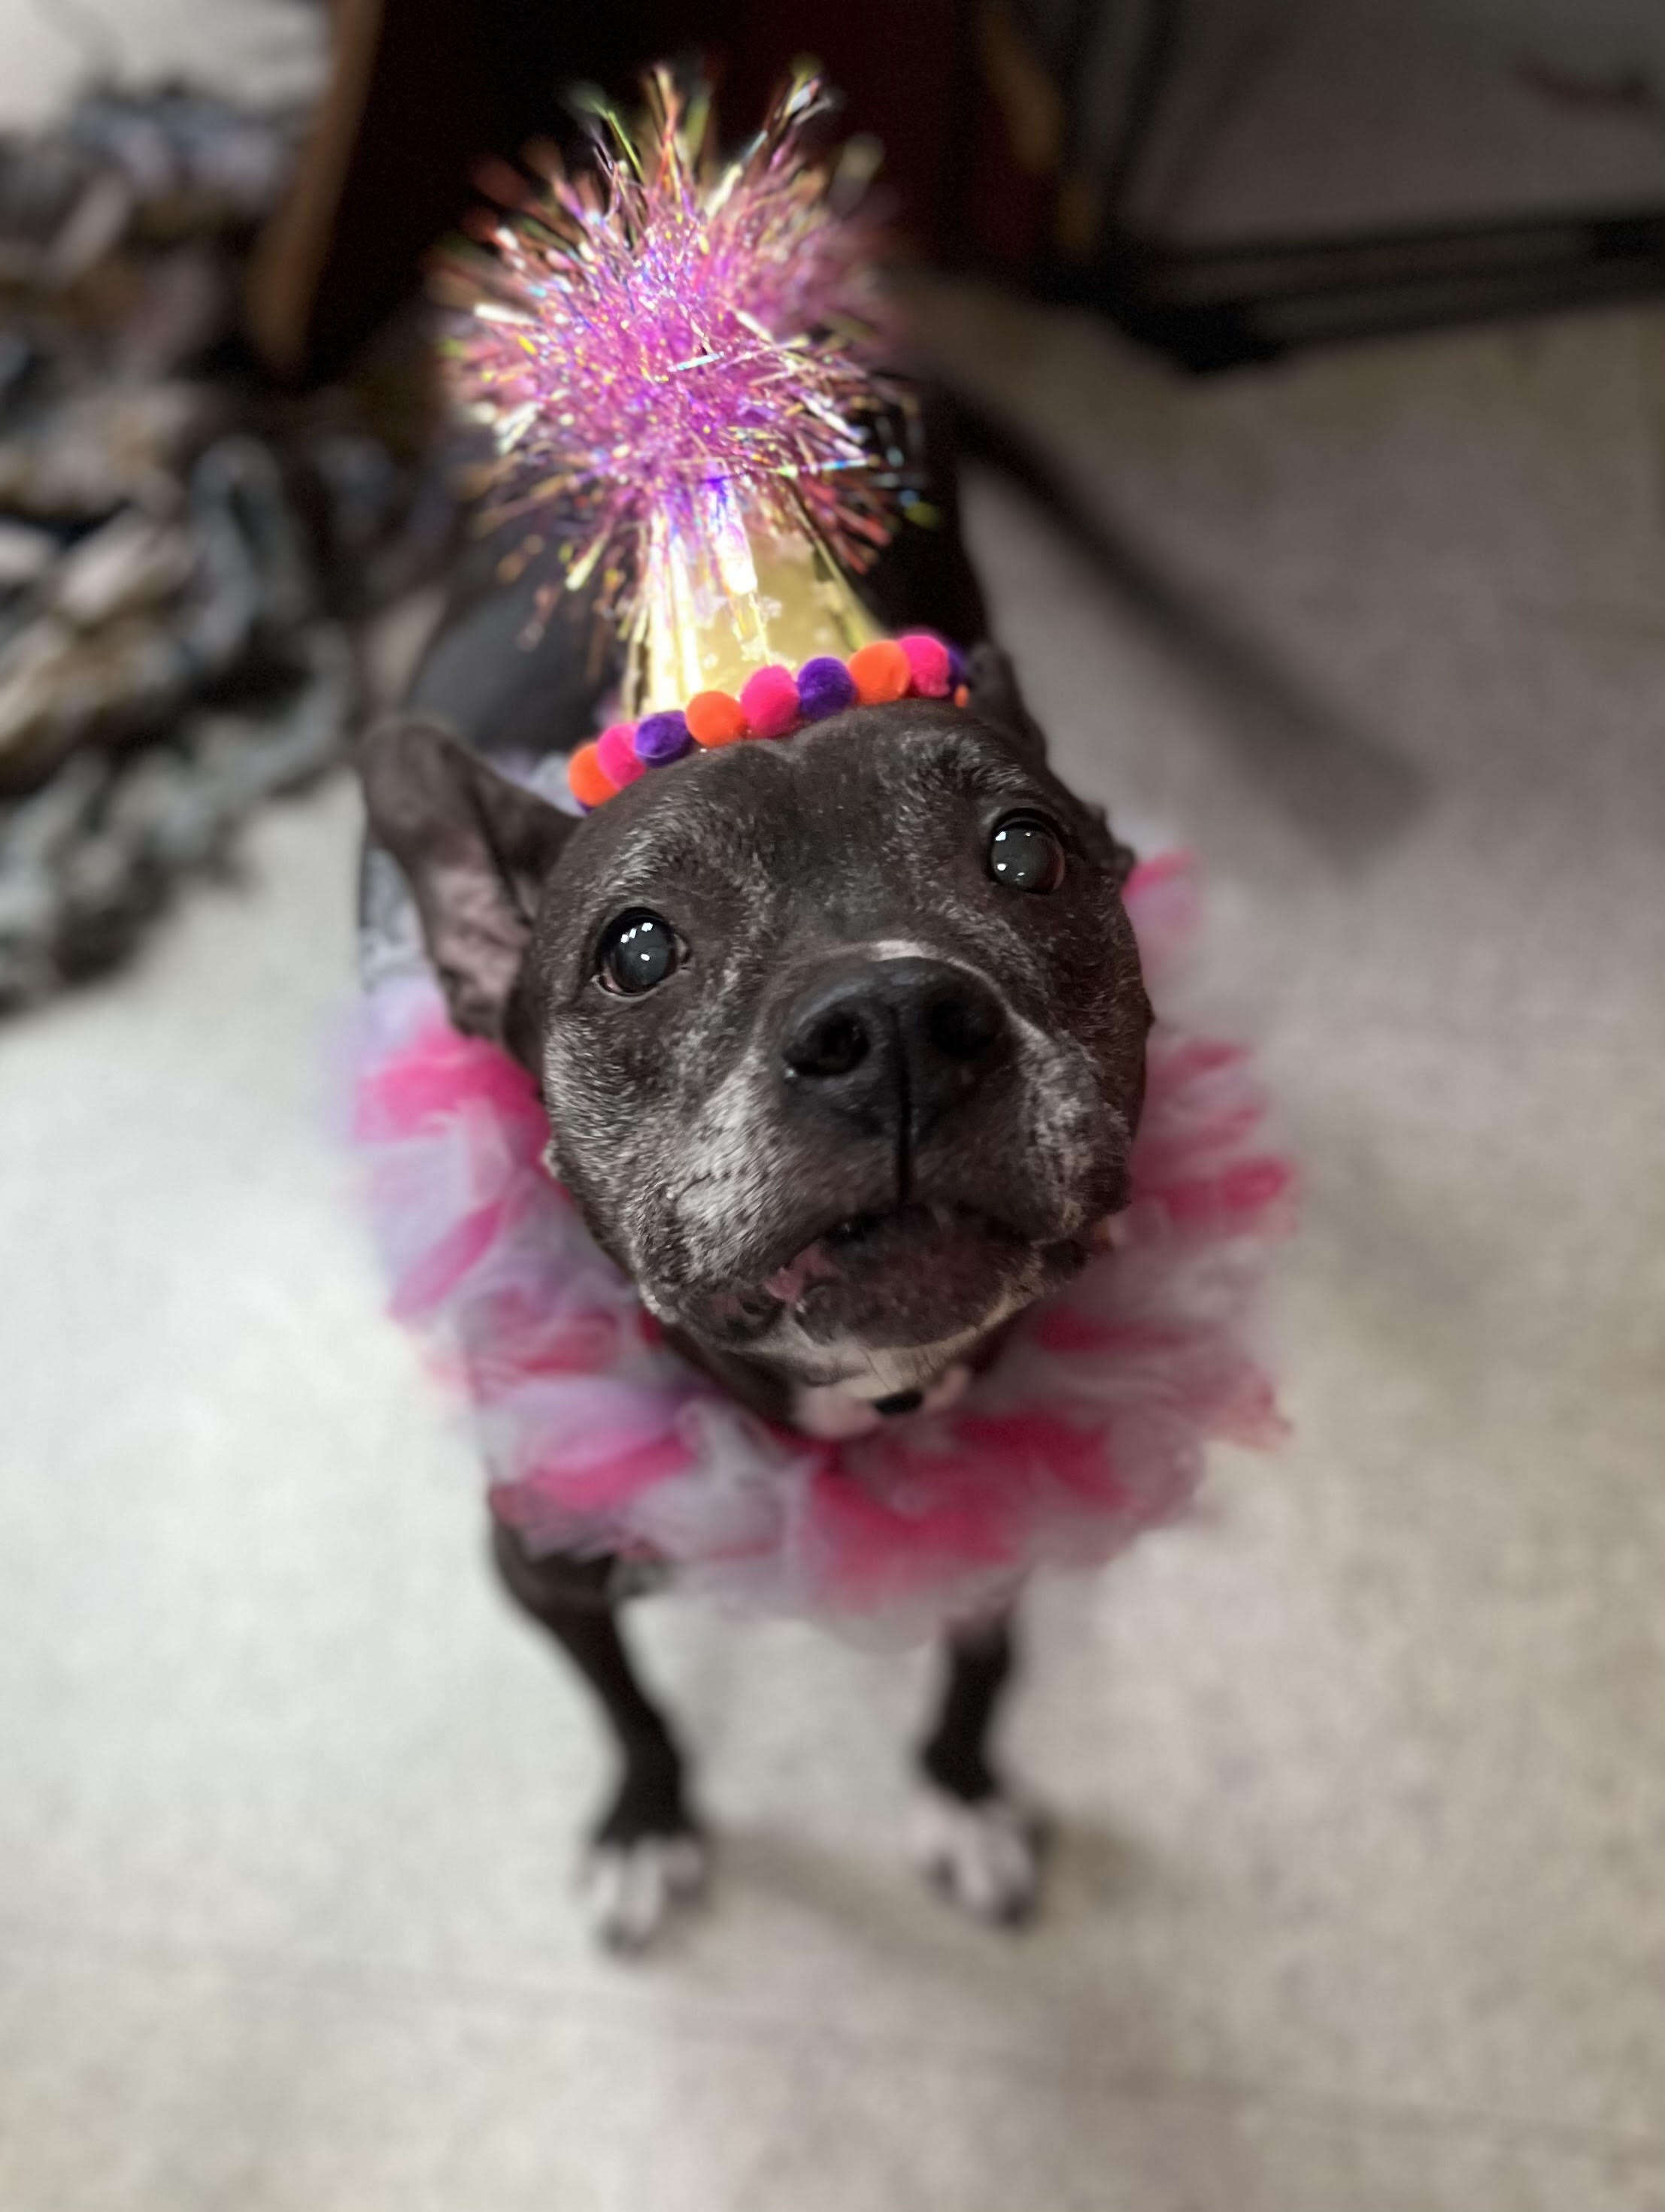 Everyone enjoys a senior dog's surprise party.